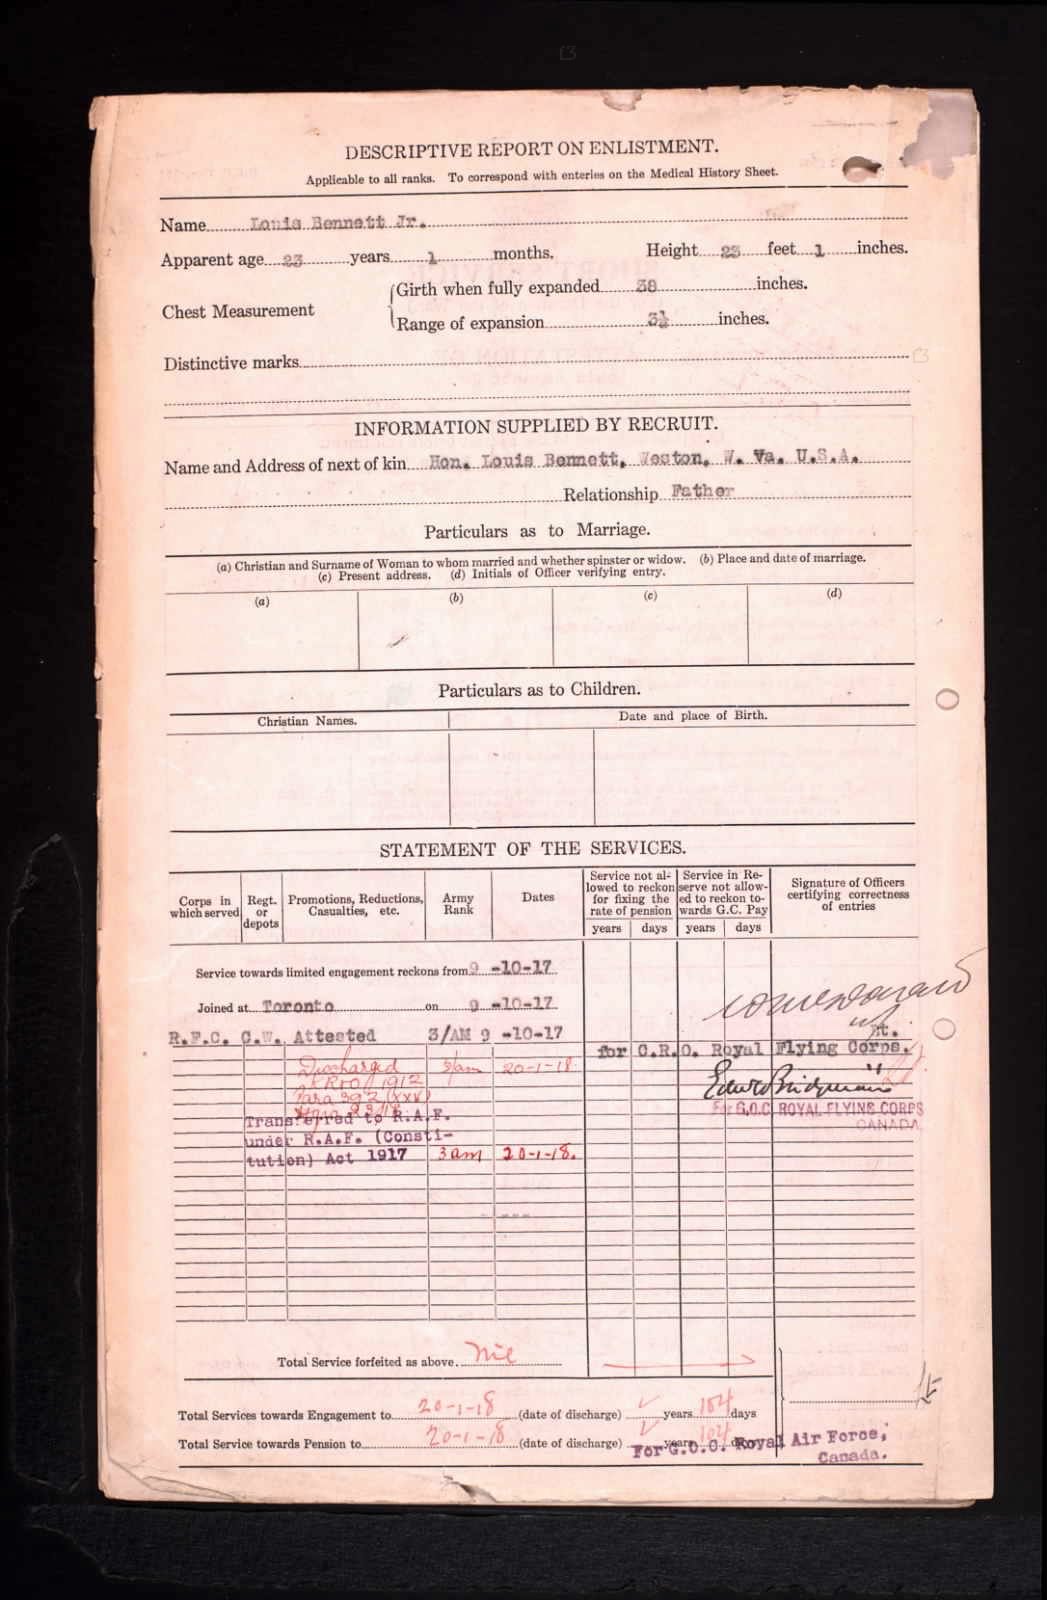 Military forms for Louis Bennett, Jr.